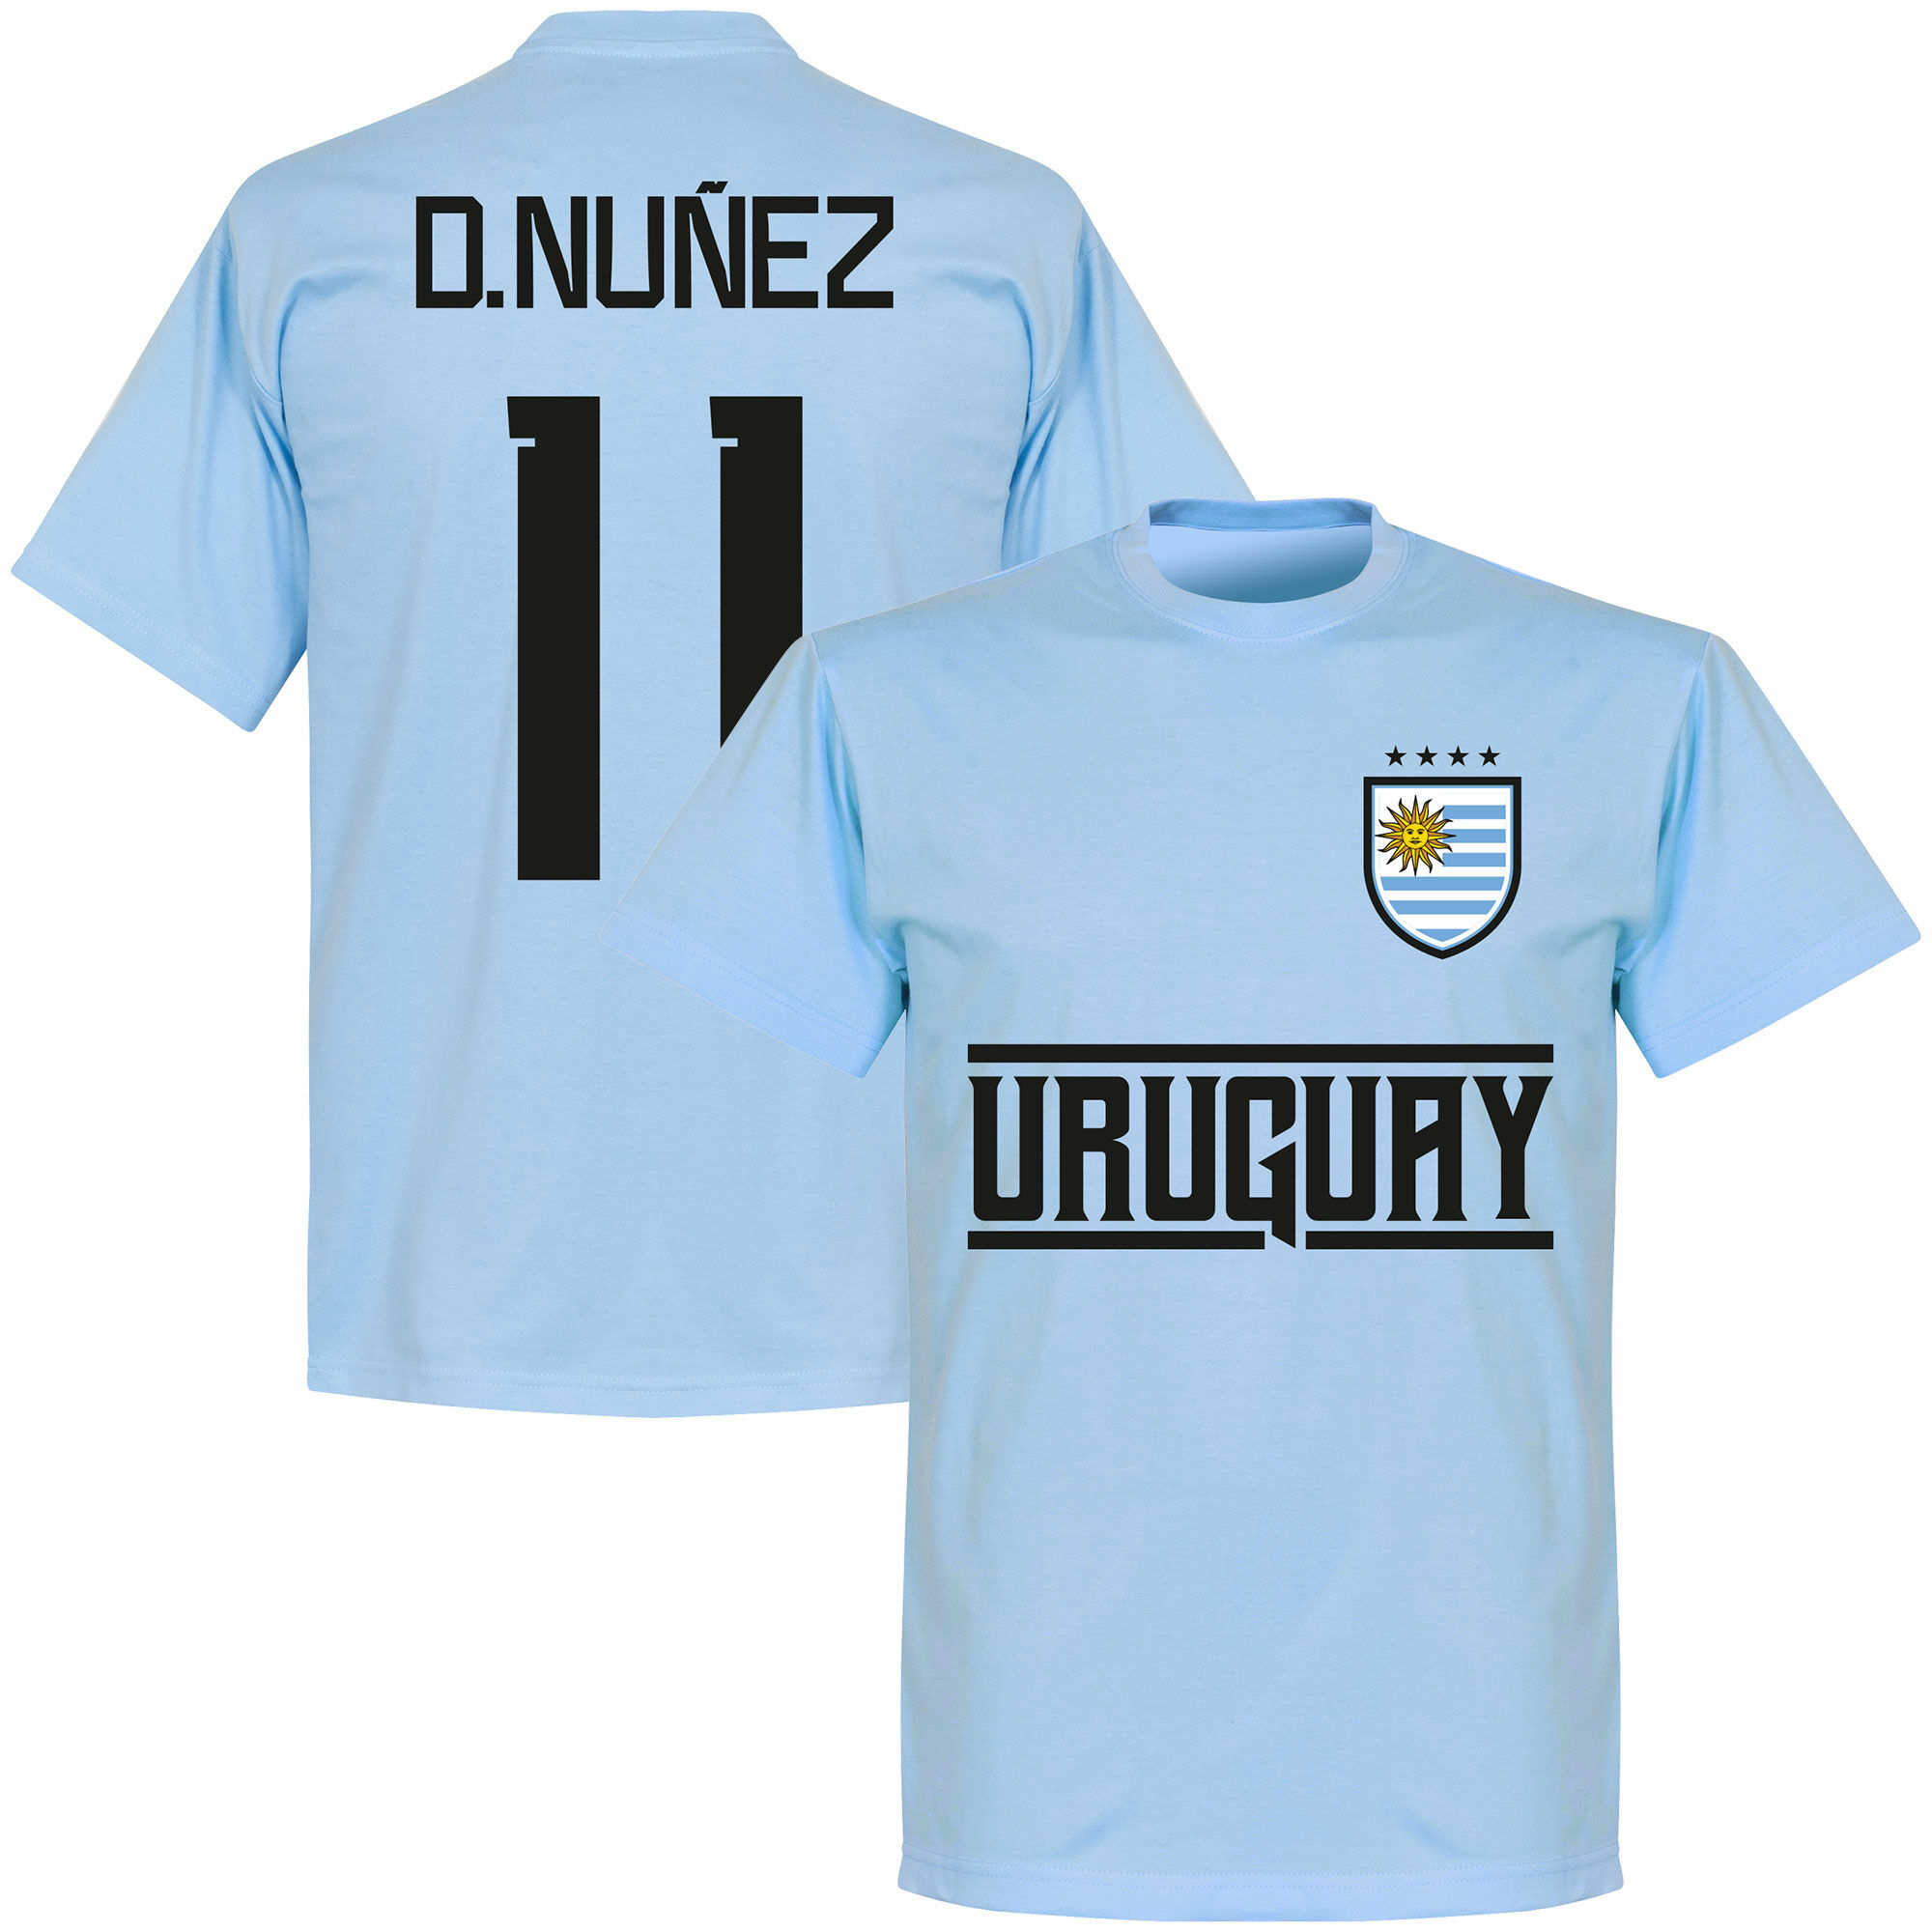 Uruguay - Tričko - číslo 11, modré, Darwin Núñez